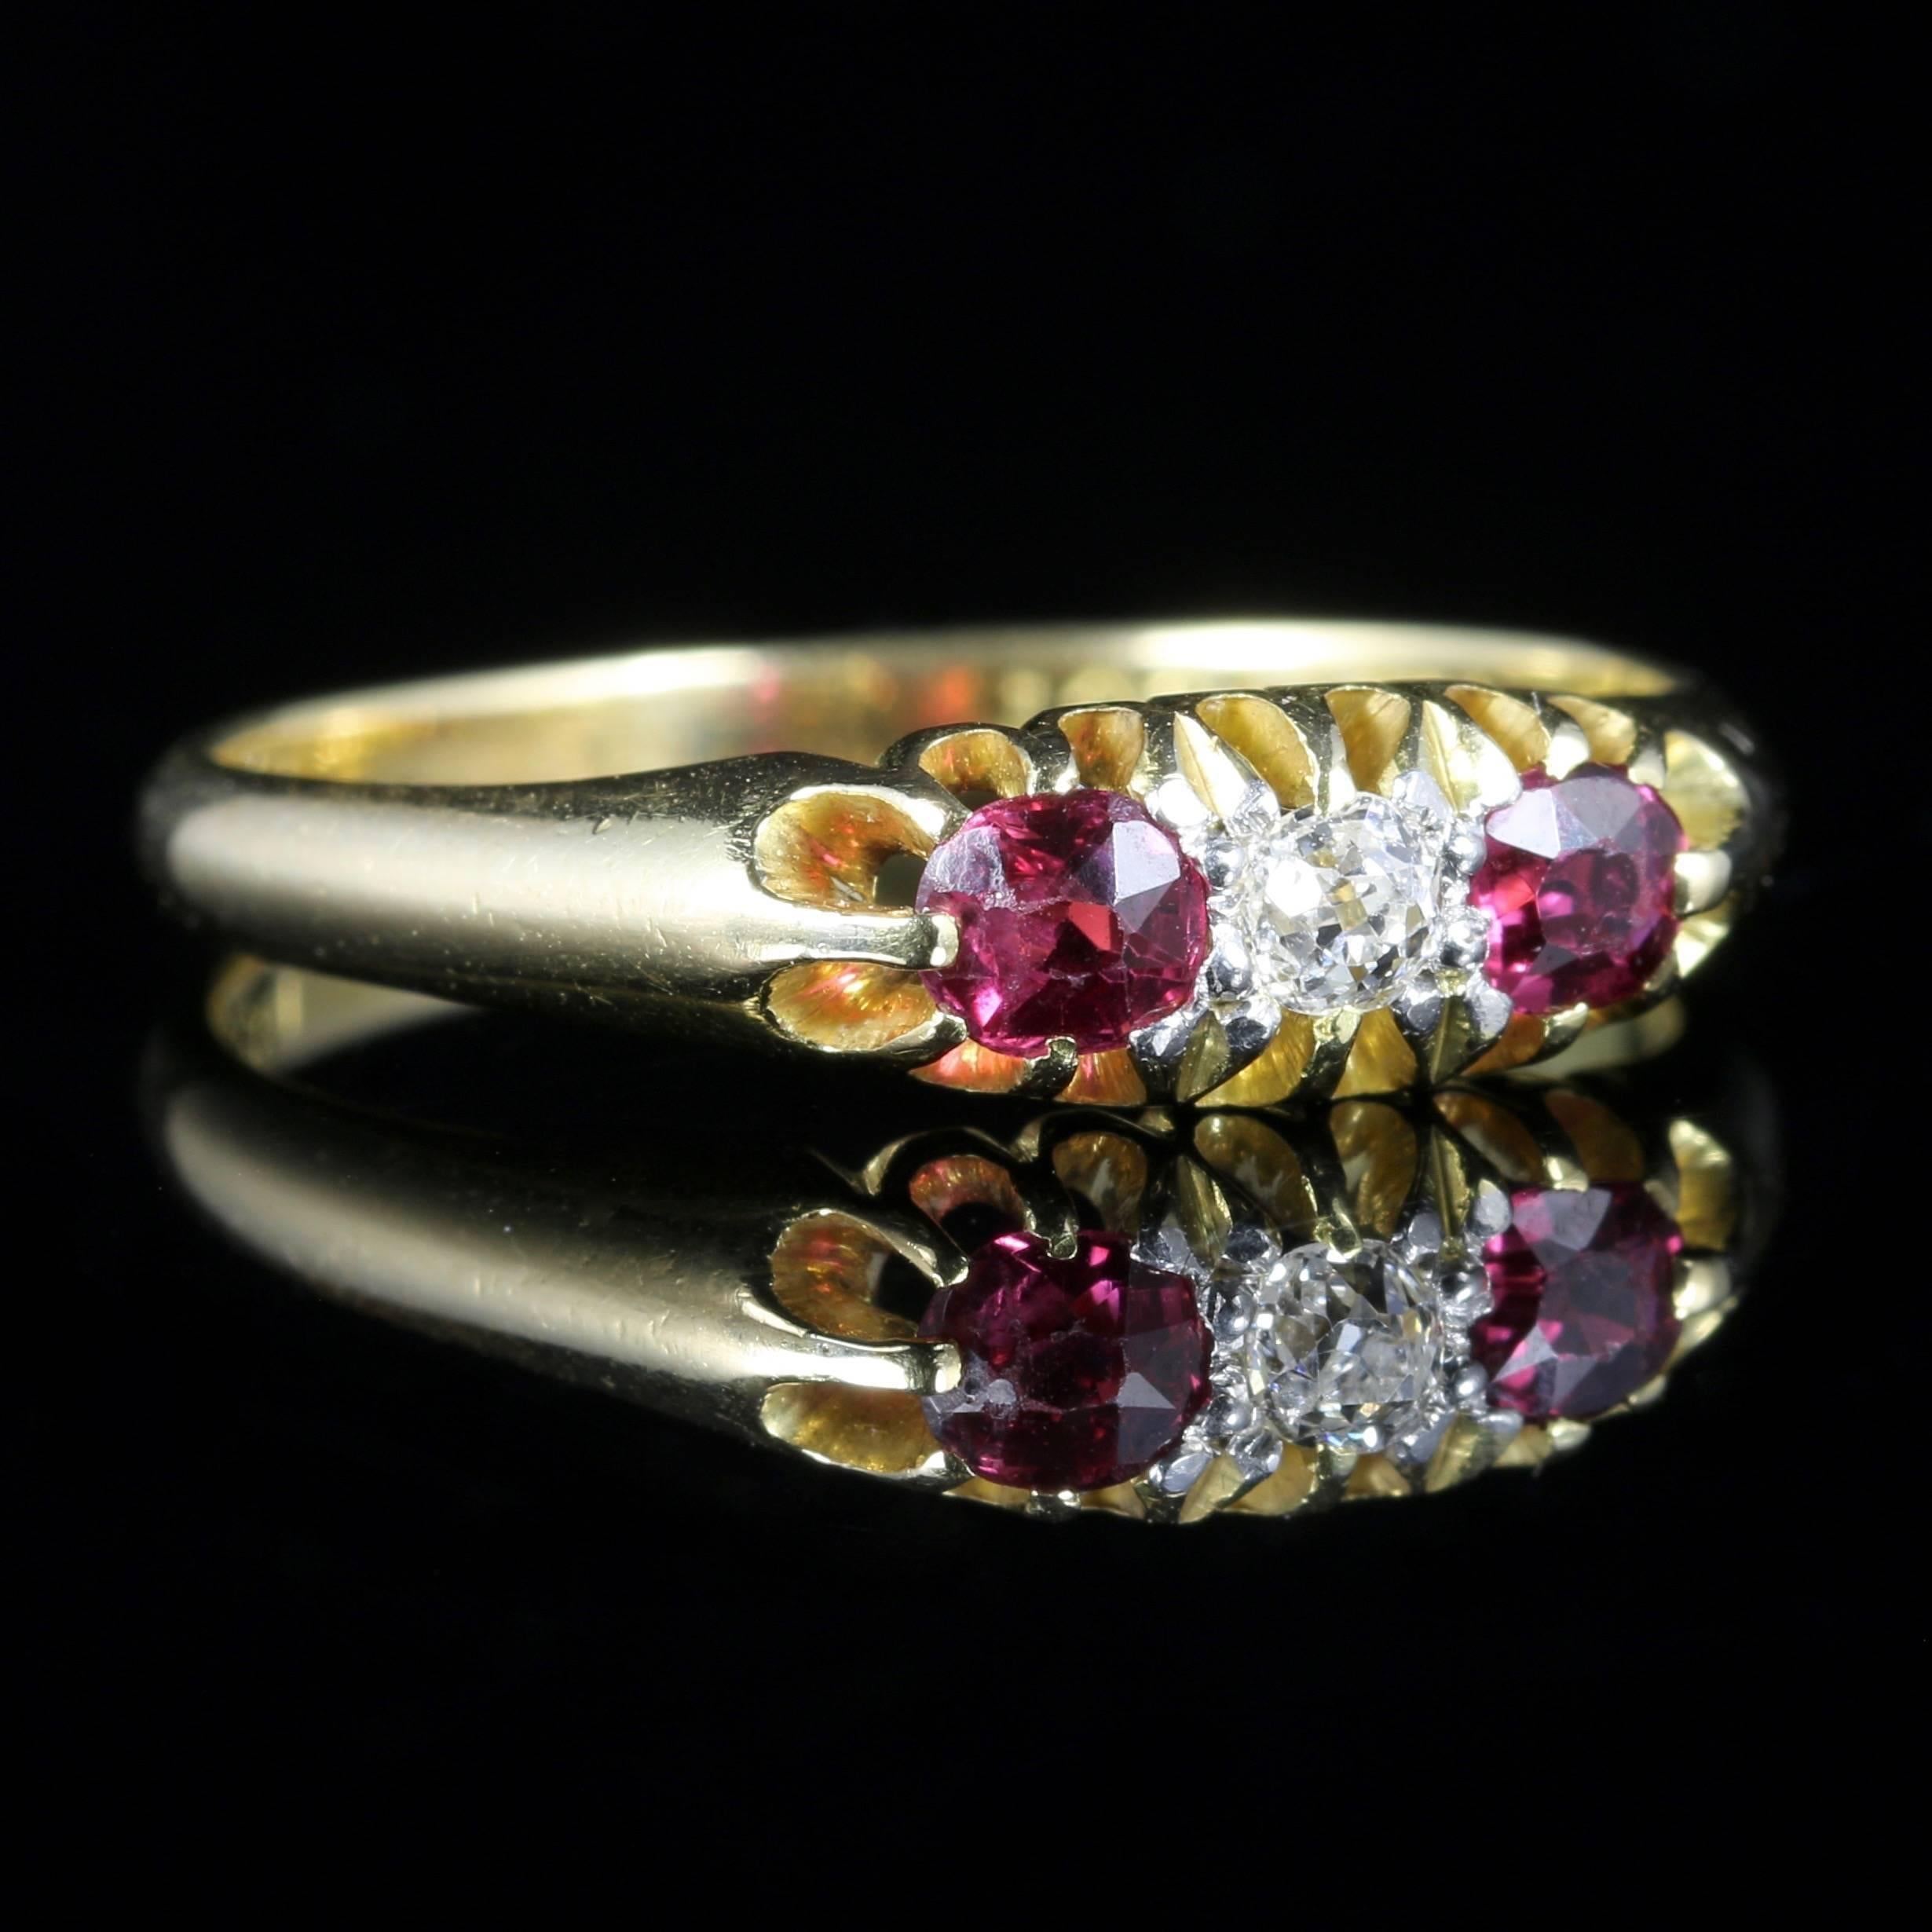 Women's Antique Victorian Ruby Diamond Ring 18 Carat Gold, circa 1900